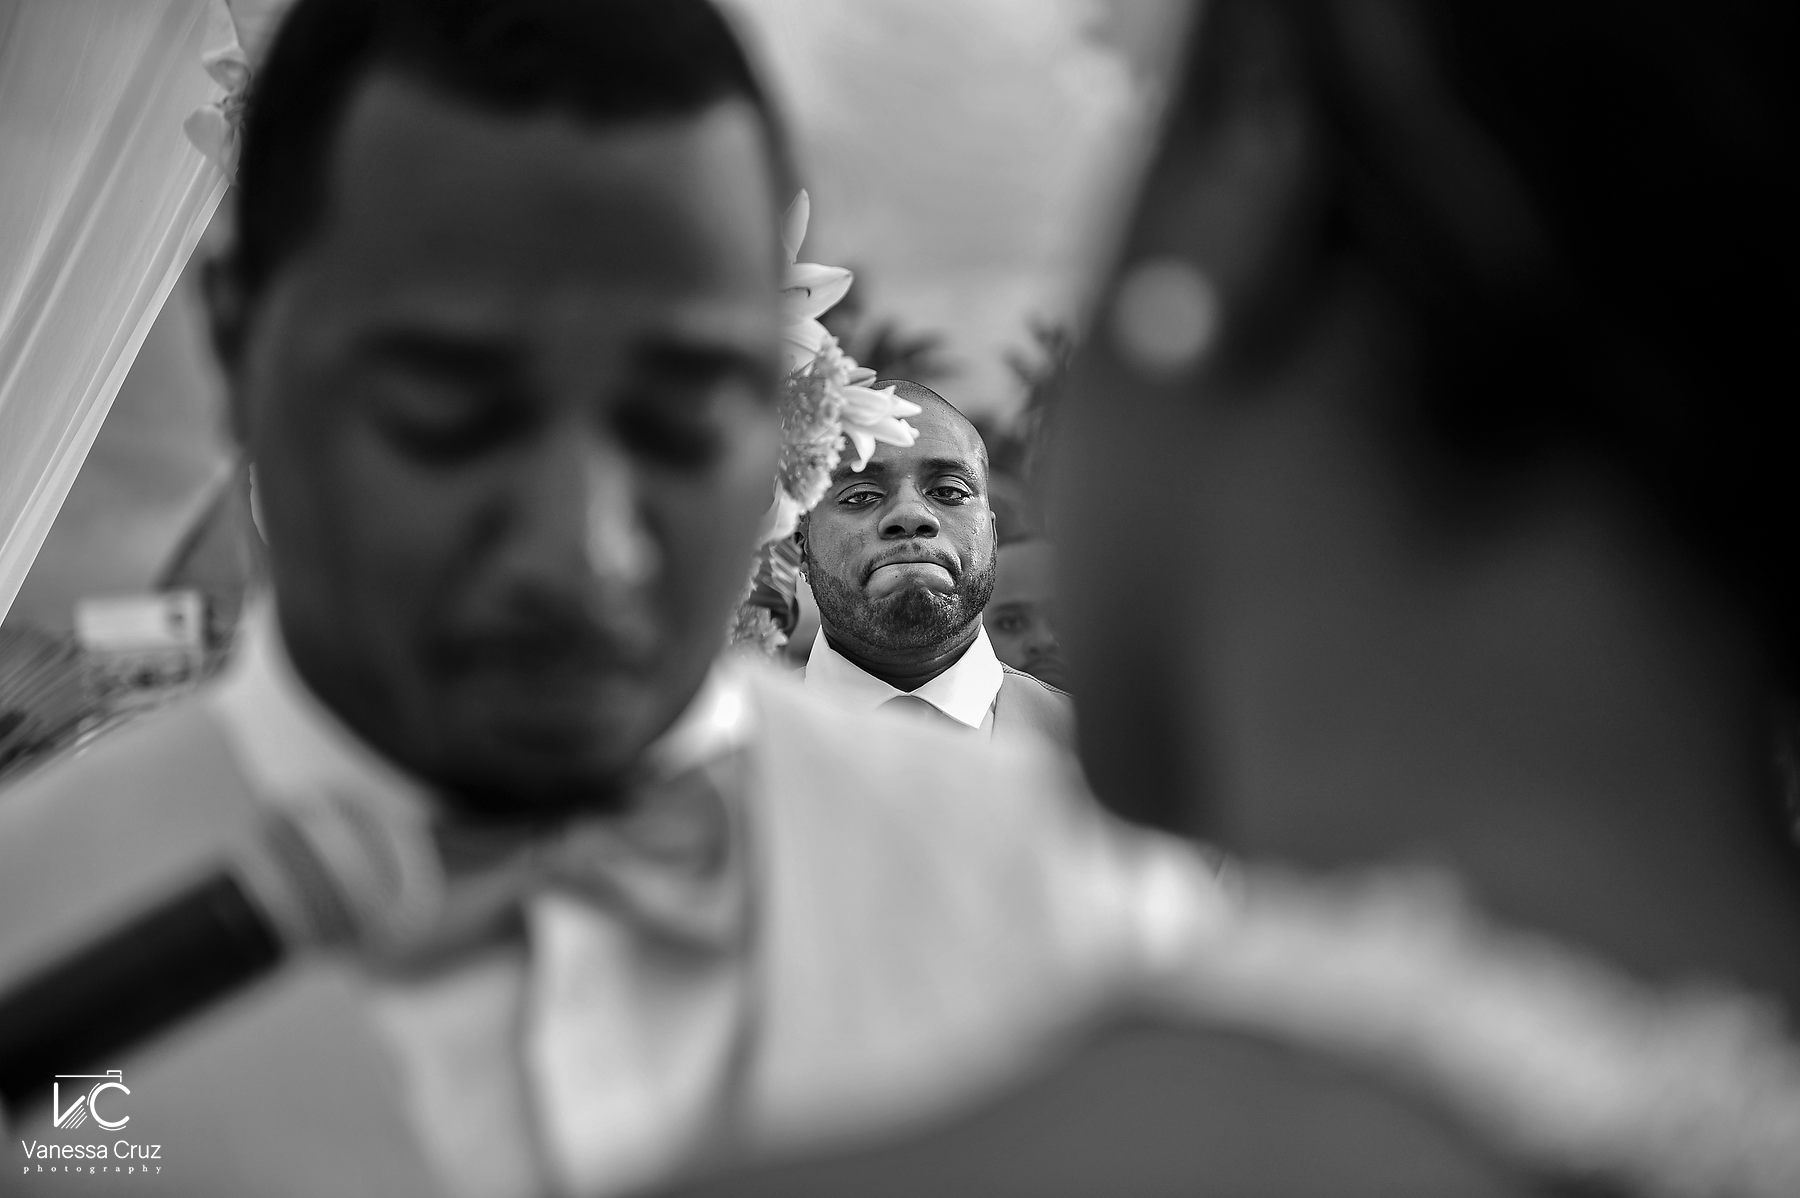 Black and white documentary wedding photography